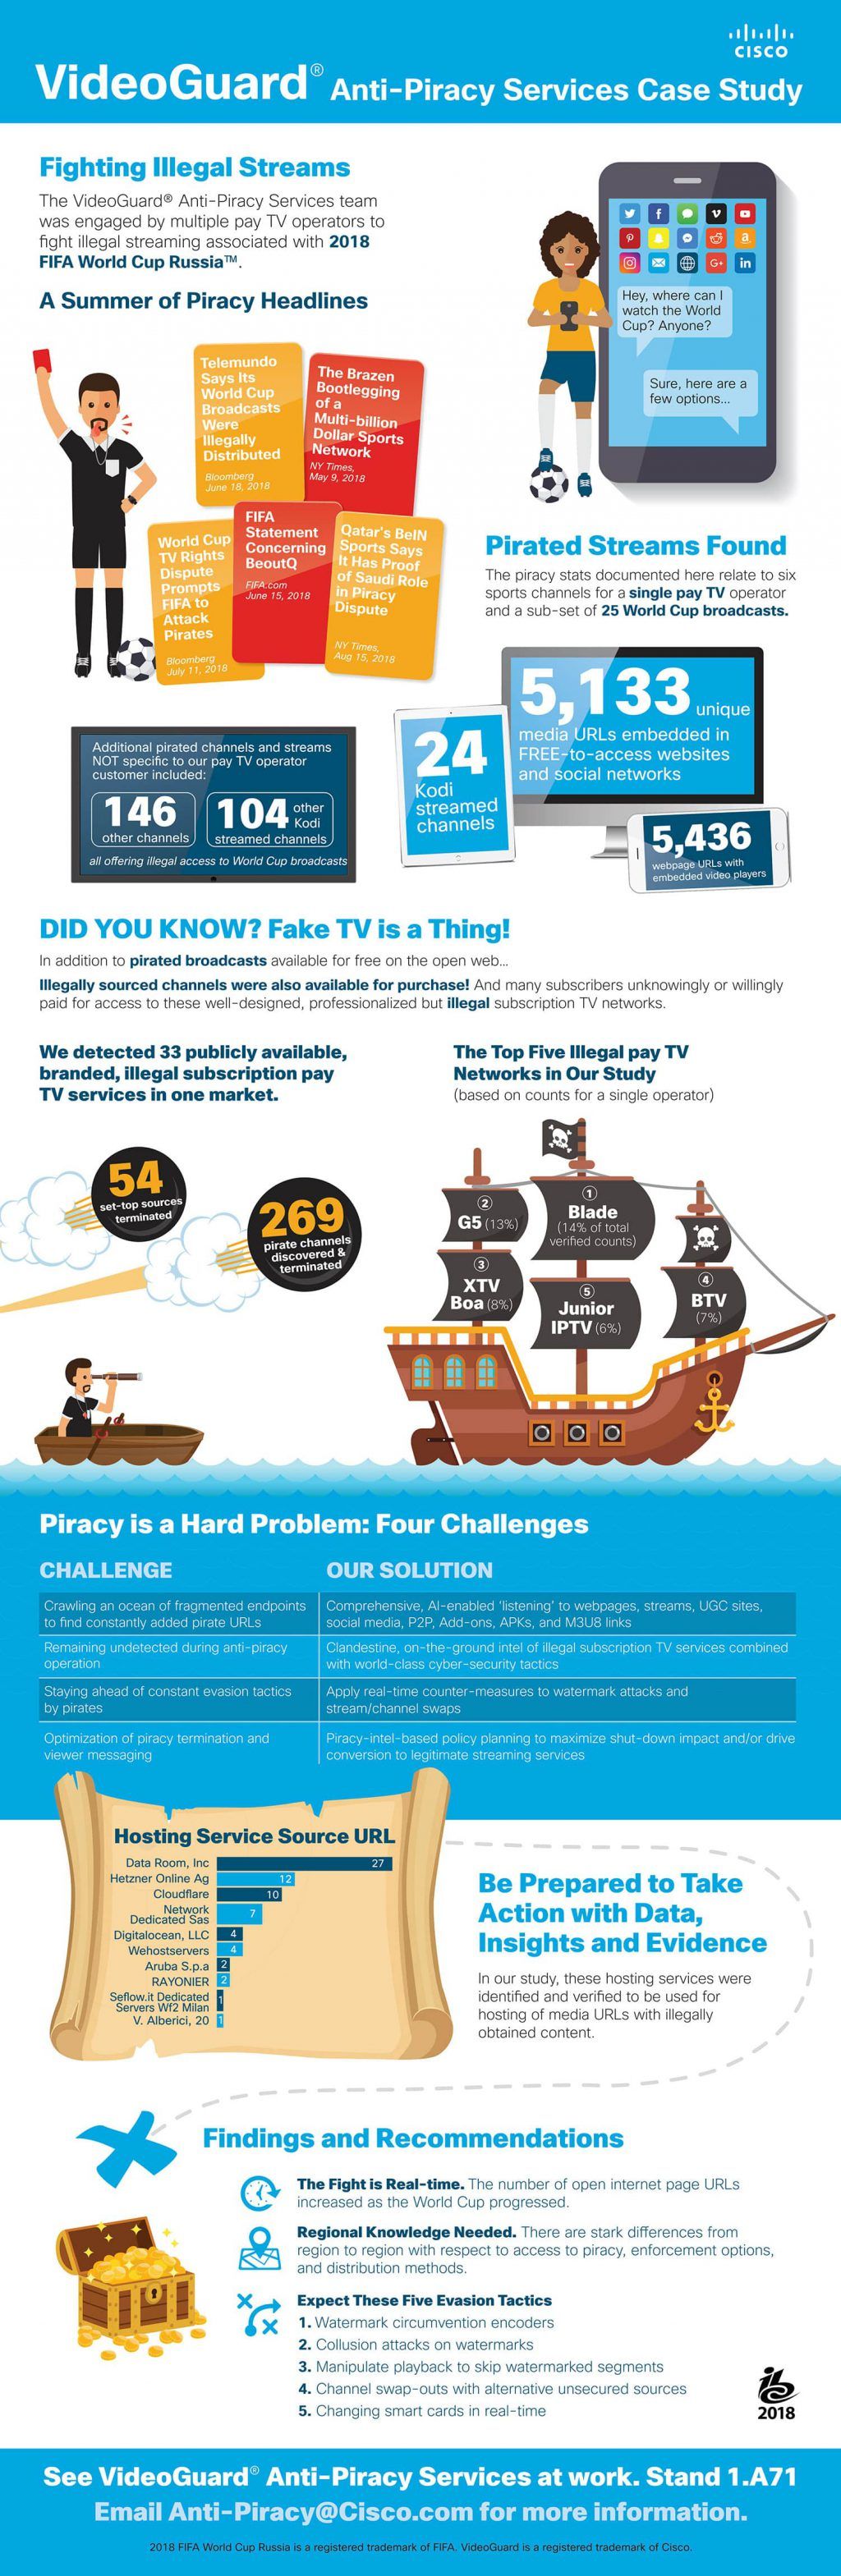 Cisco VideoGuard Anti-Piracy infographic